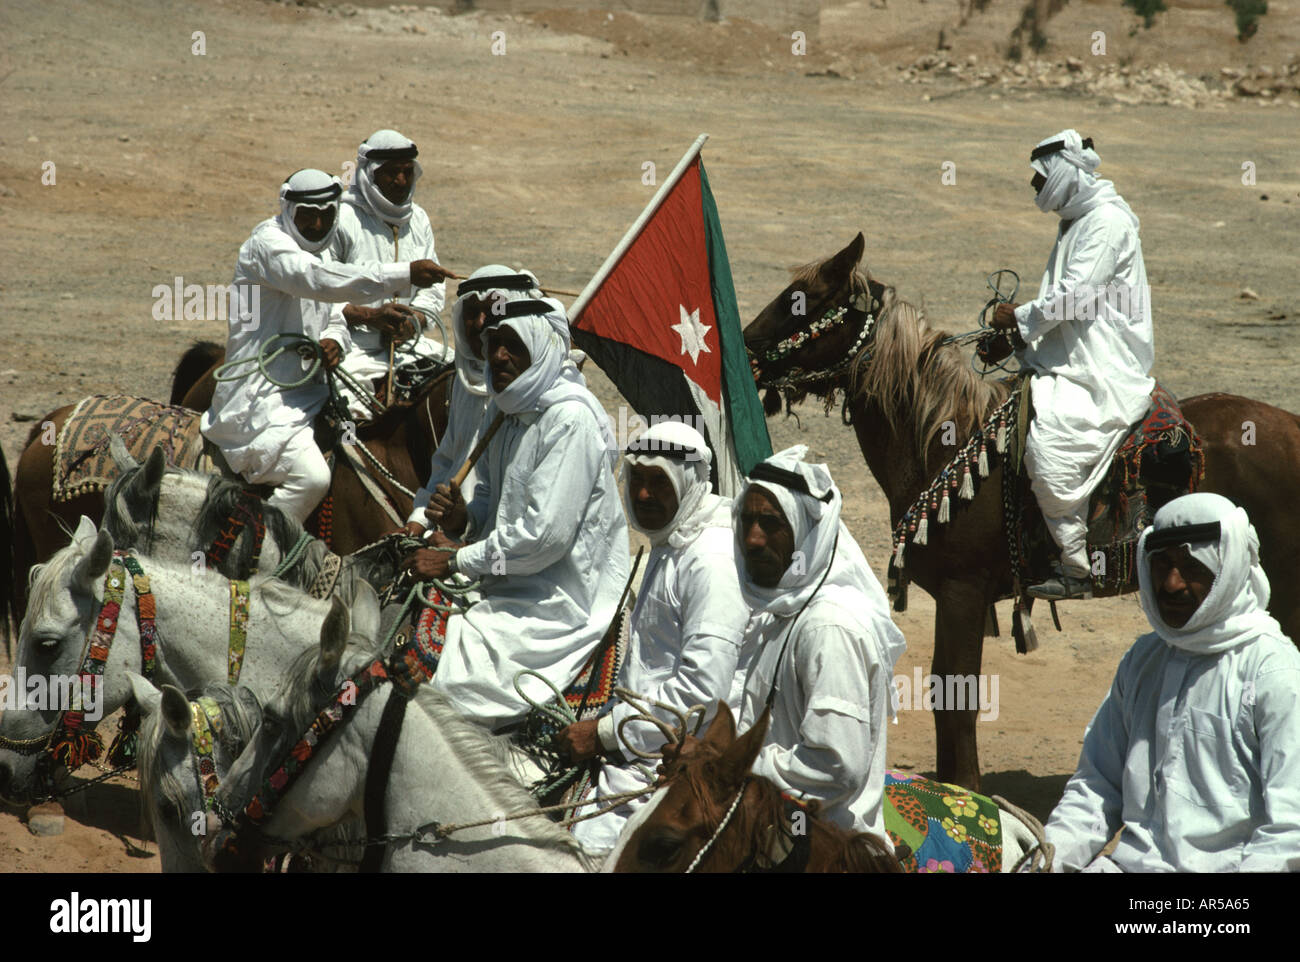 Jordanian arab horsemen and Jordanian flag during celebration in the souther town of Ma an Jordan Stock Photo